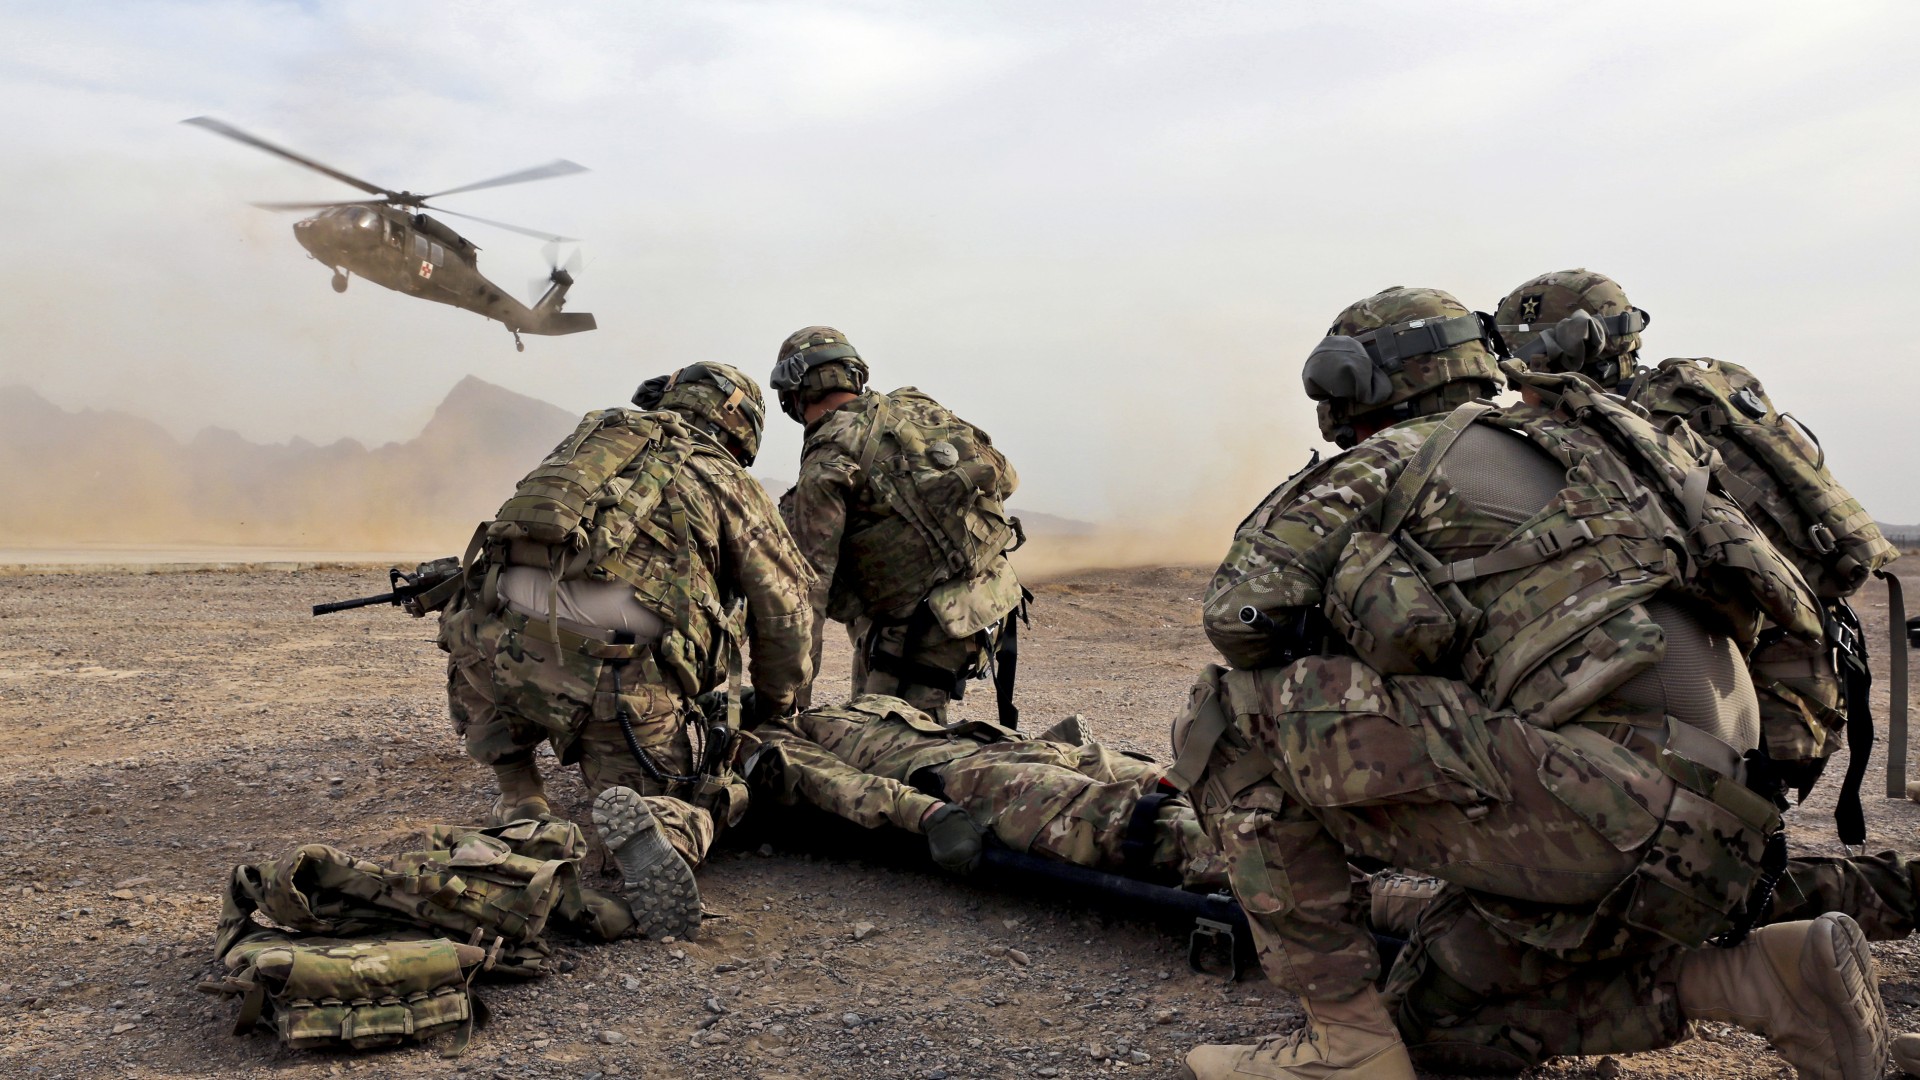 soldier, rescue mission, helicopter, uniform, desert (horizontal)